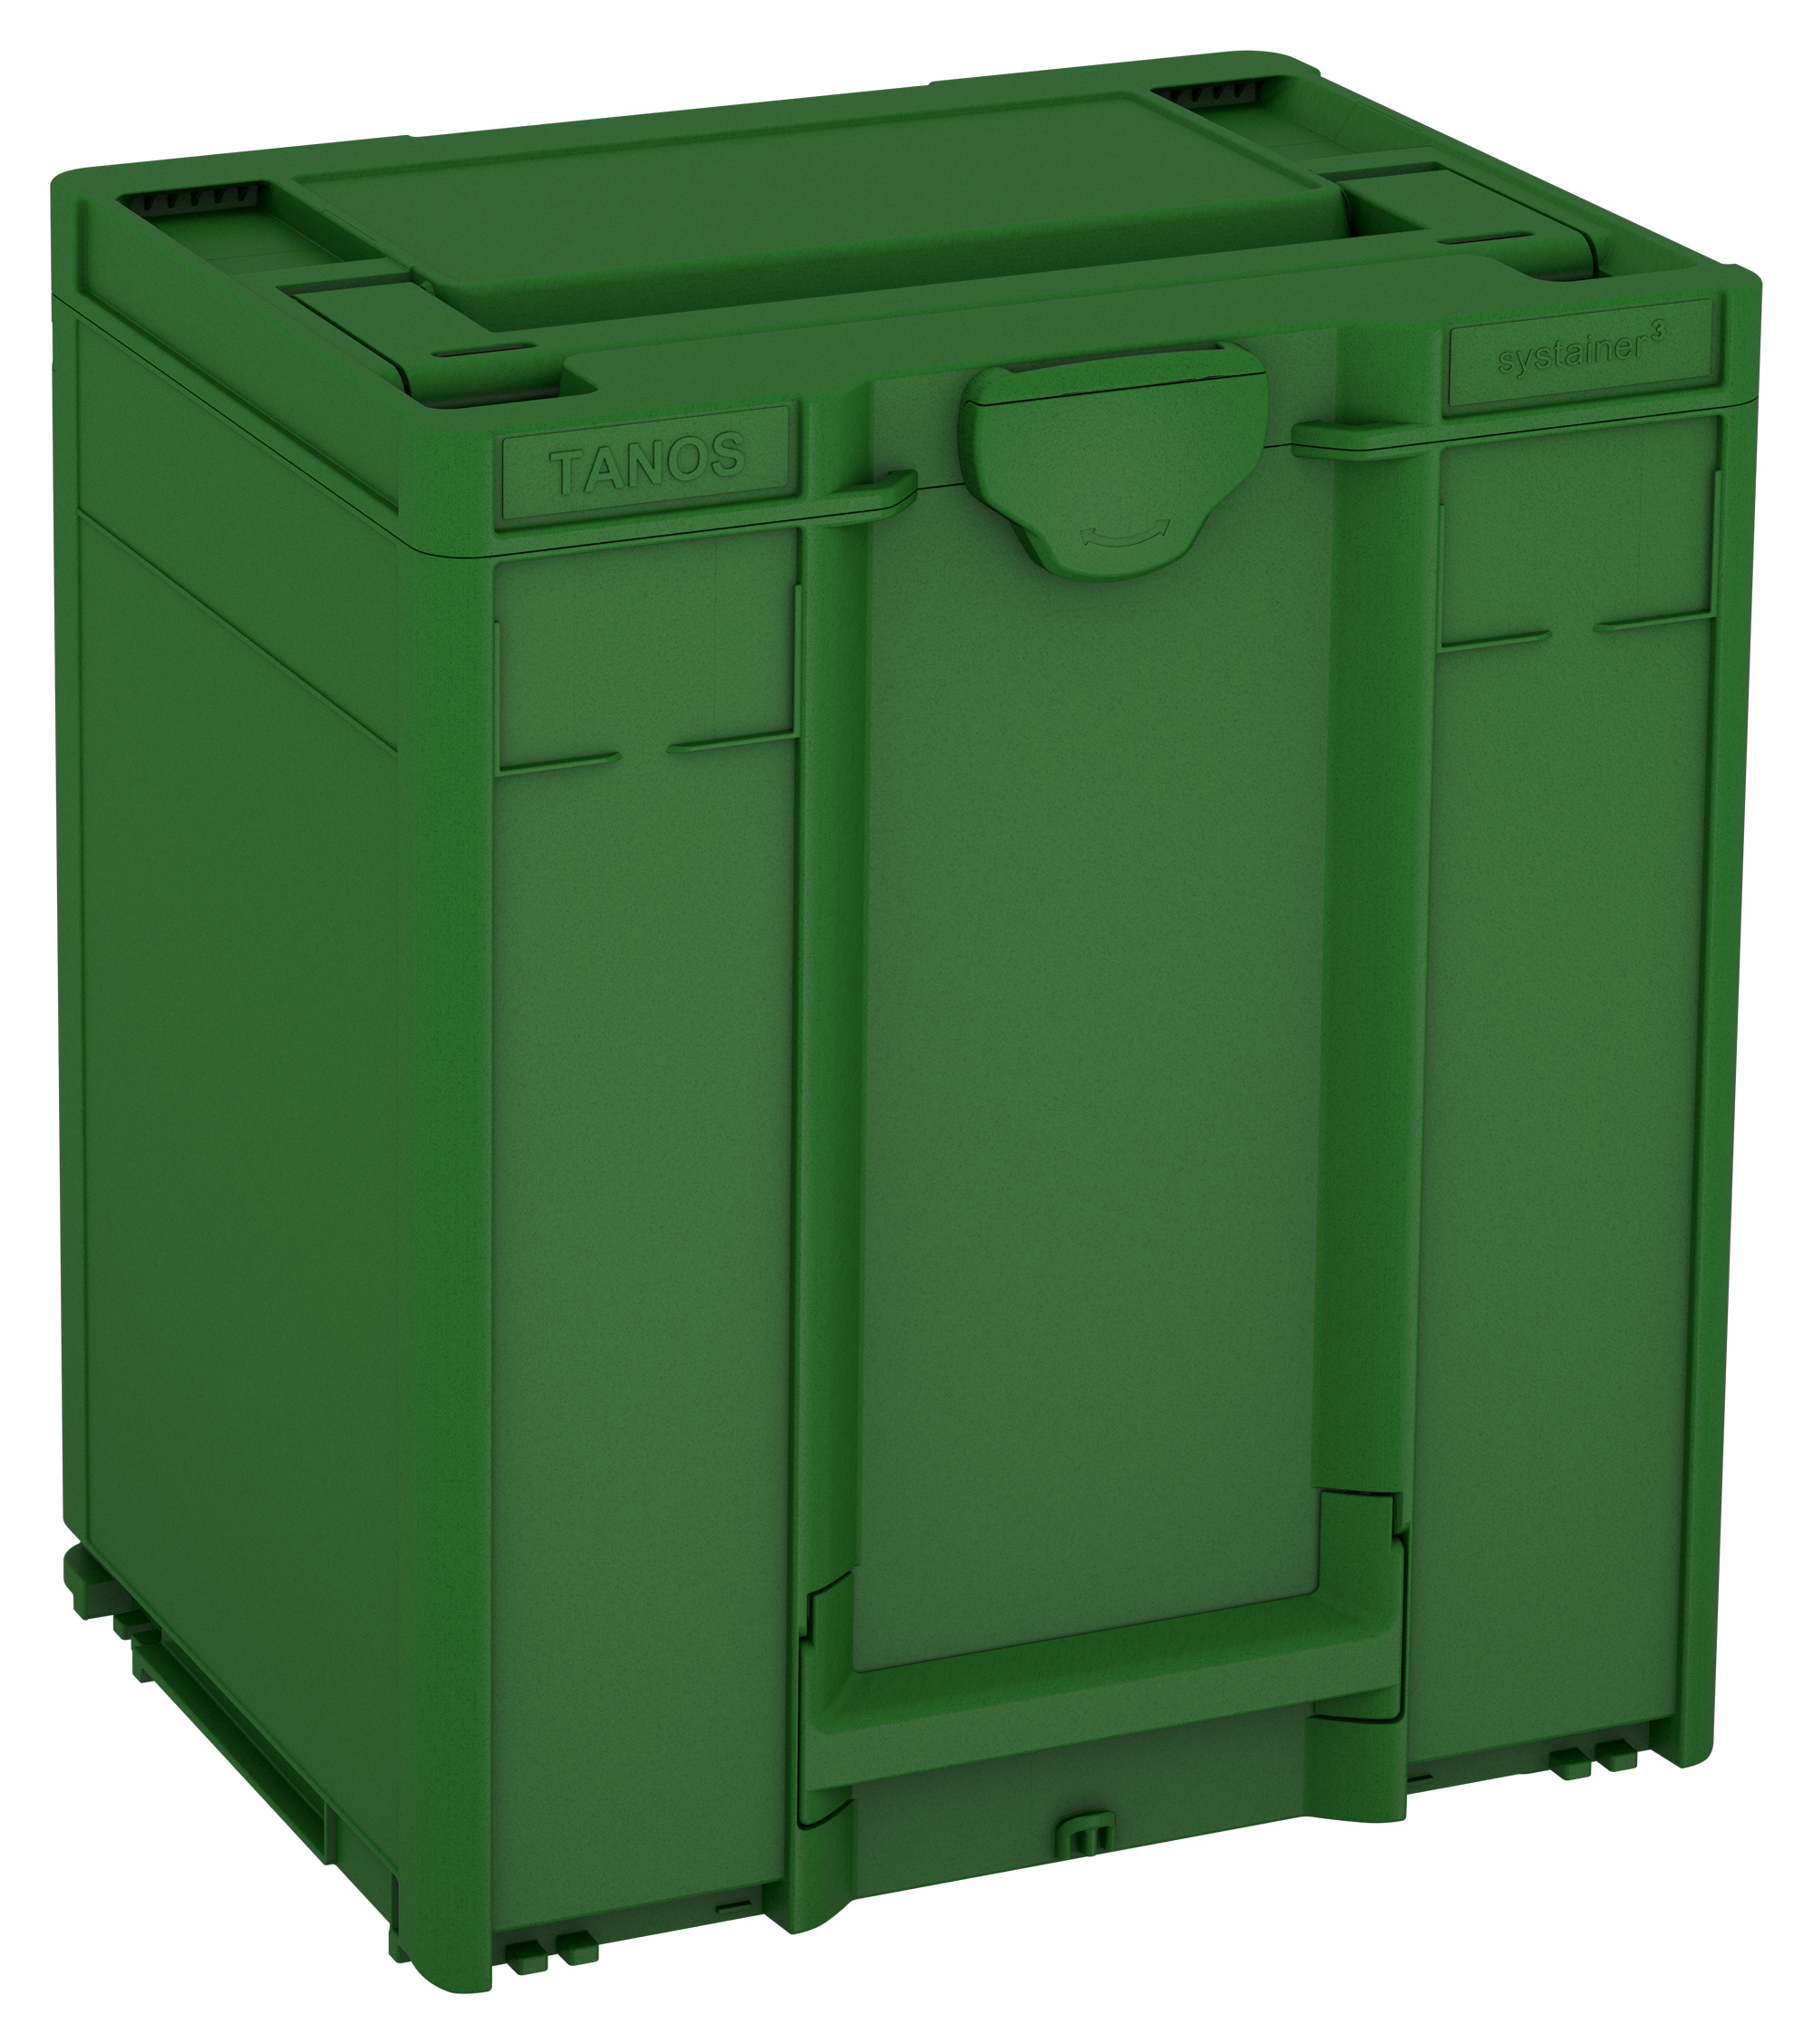 Systainer³ M 437 - Korpus Farbe: Smaragdgrün (RAL 6001) - Griff Farbe: Smaragdgrün (RAL 6001) - Verschluss Farbe: Smaragdgrün (RAL 6001)